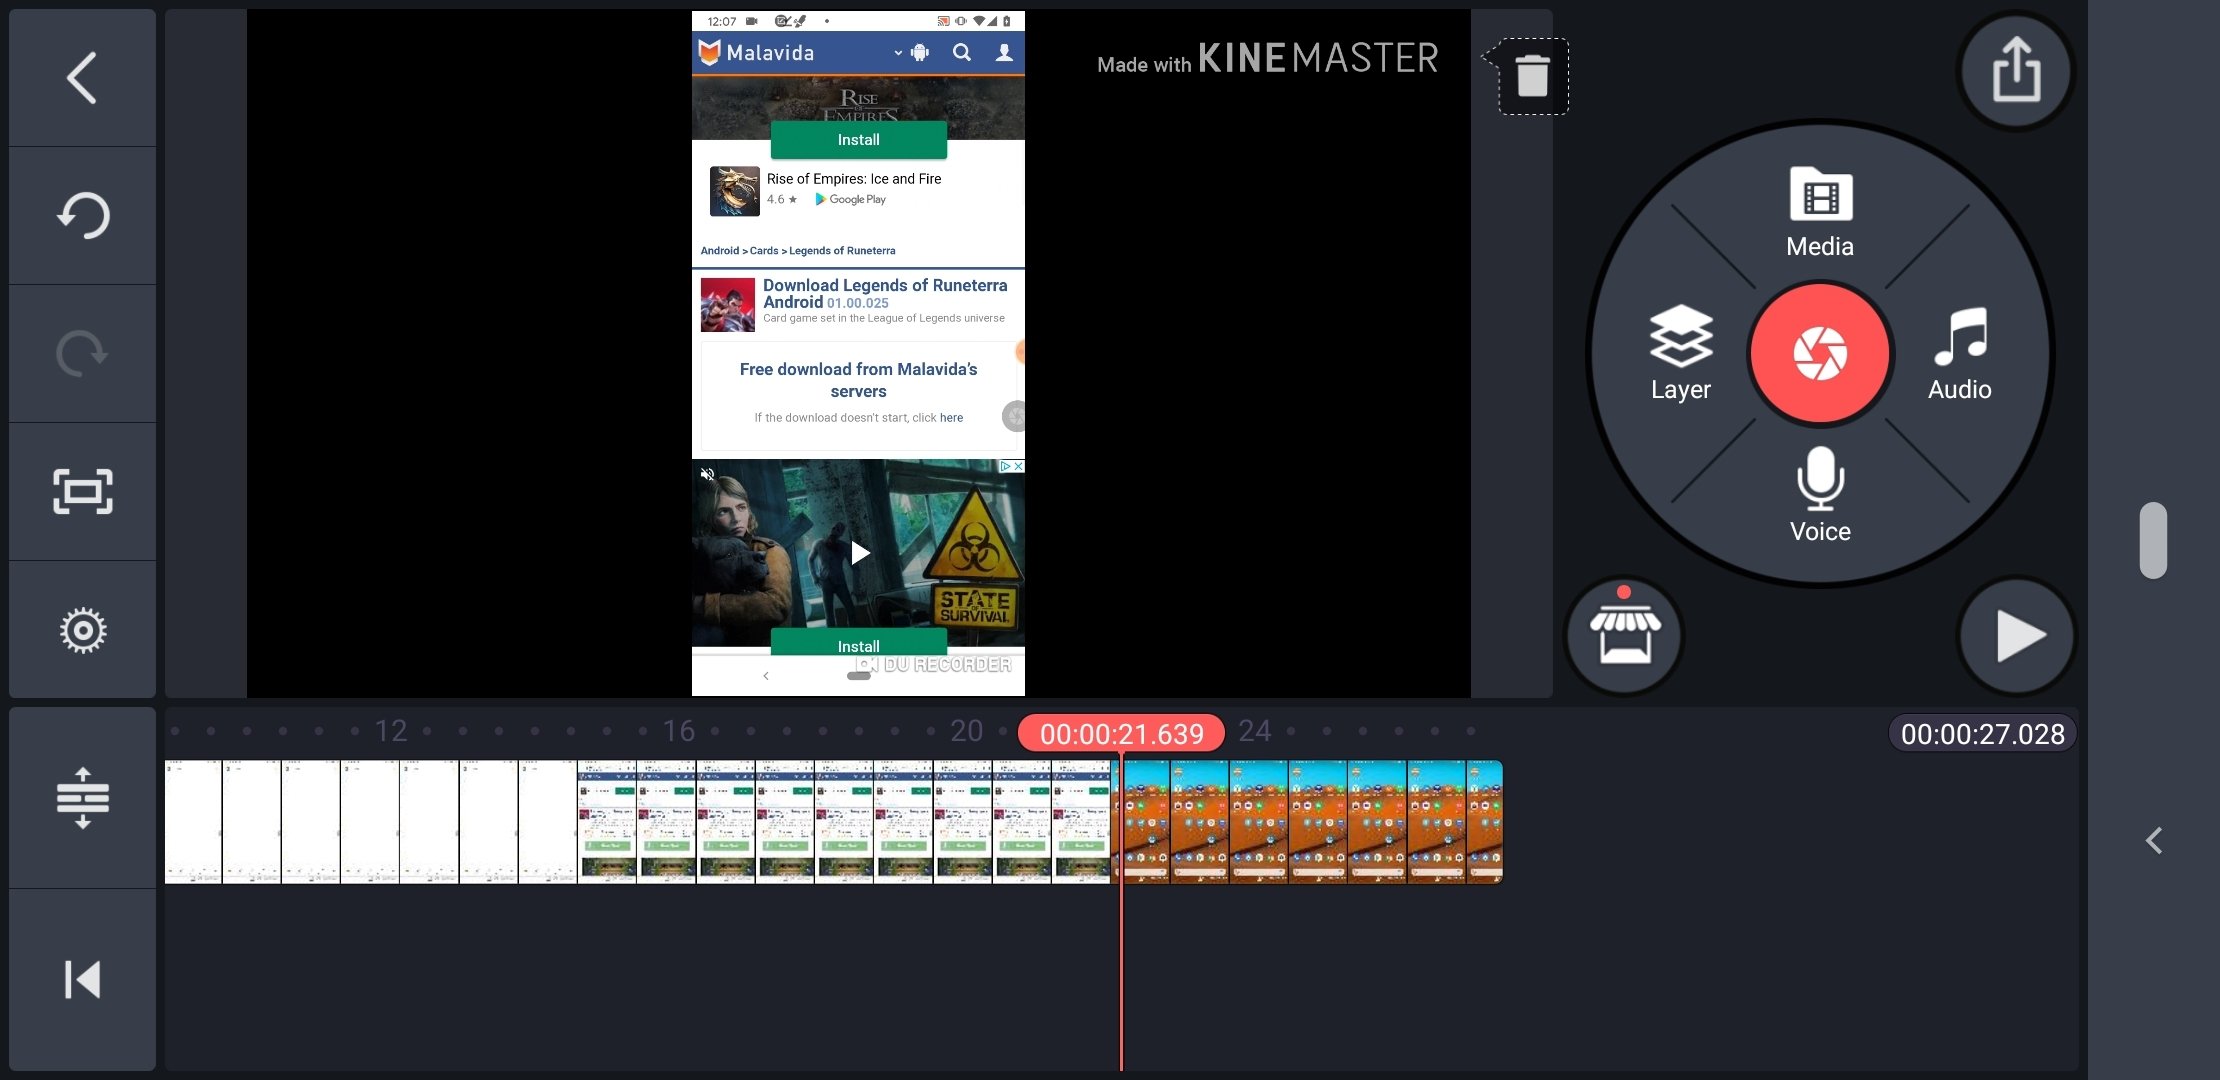 Kinemaster Pro Download For Mac